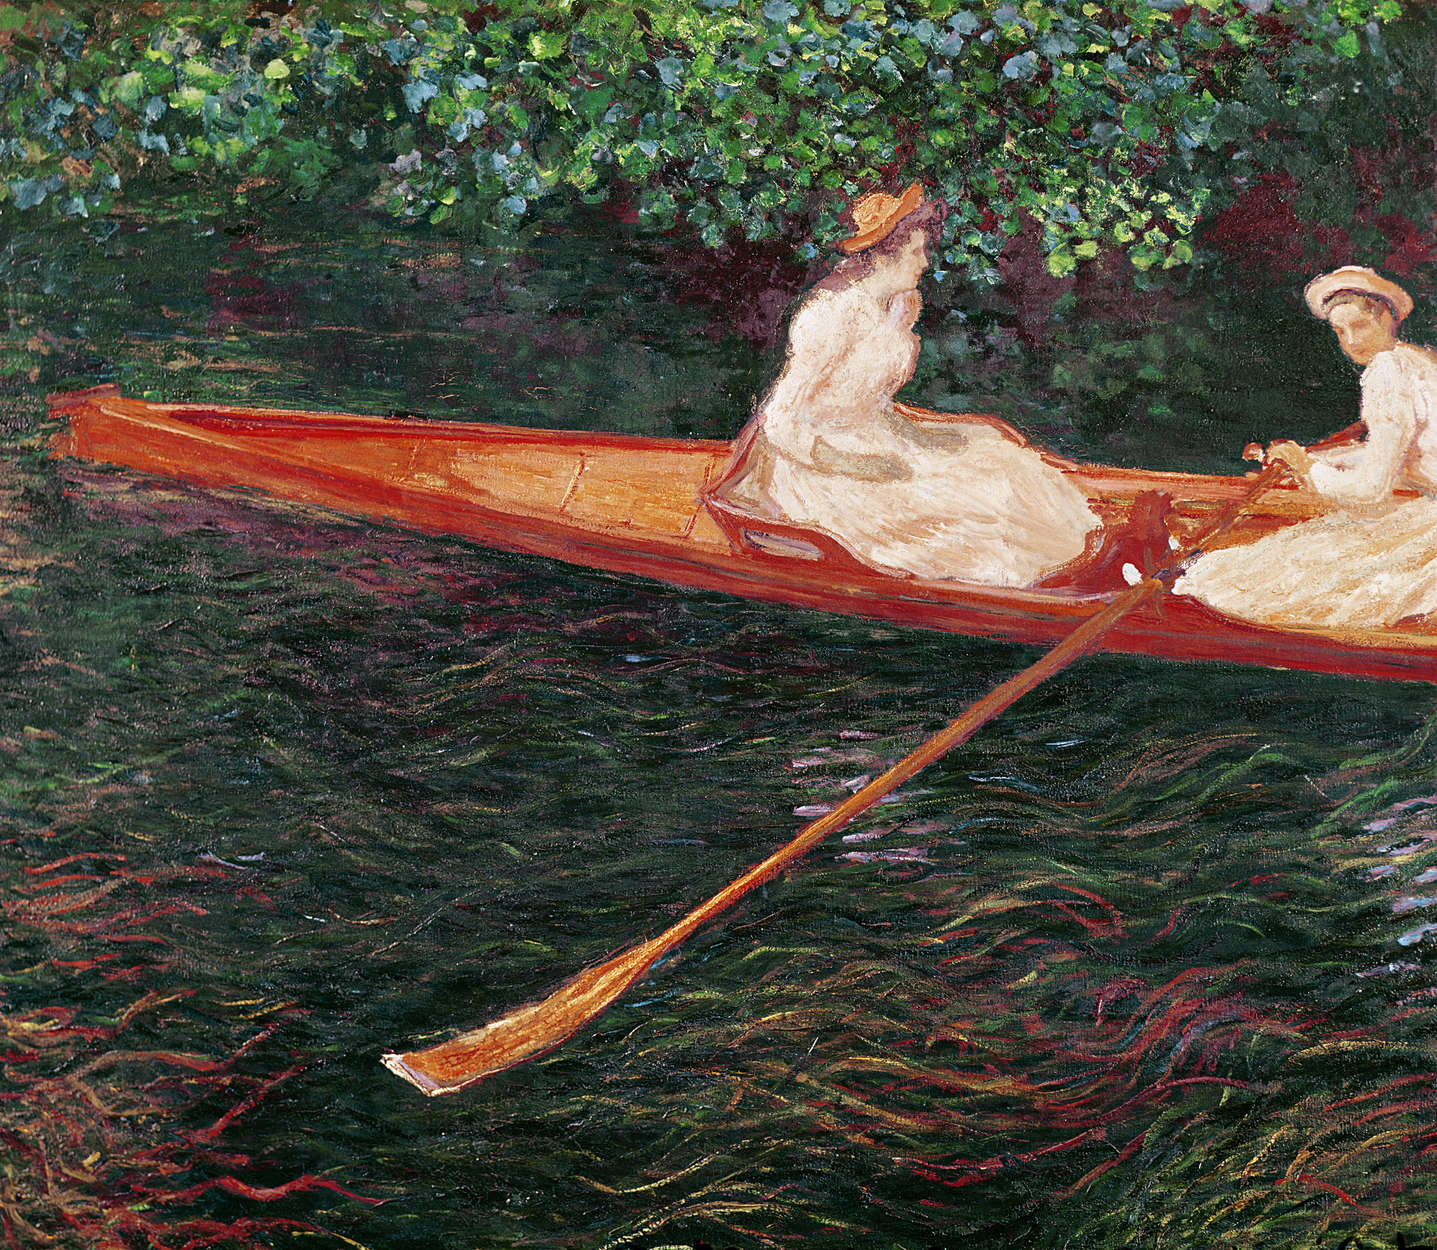             Fotomurali "In barca sul fiume Epte" di Claude Monet
        